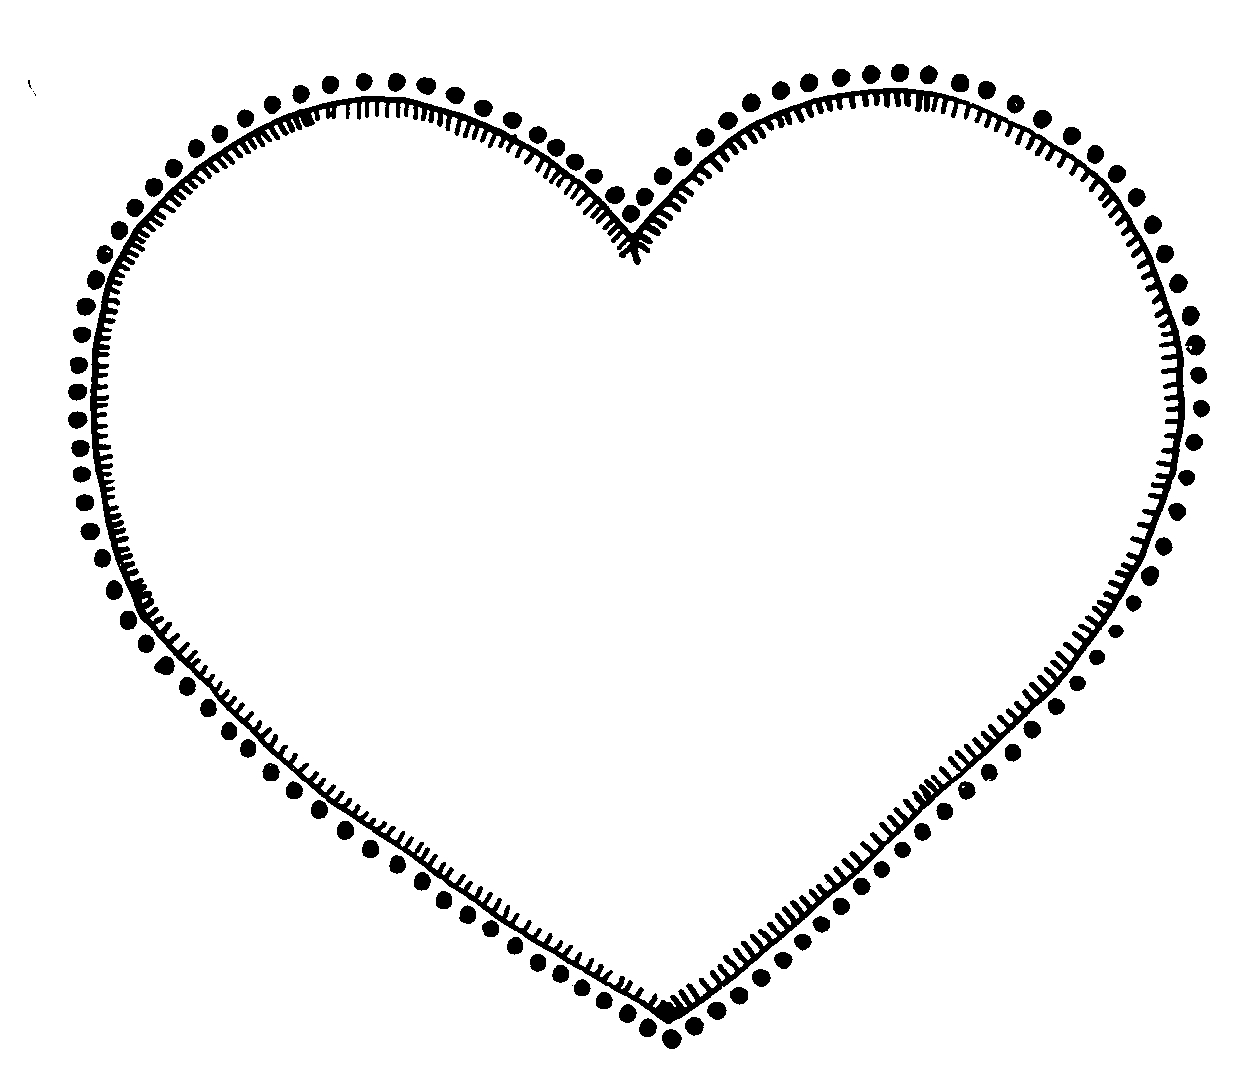 valentine heart clipart black and white